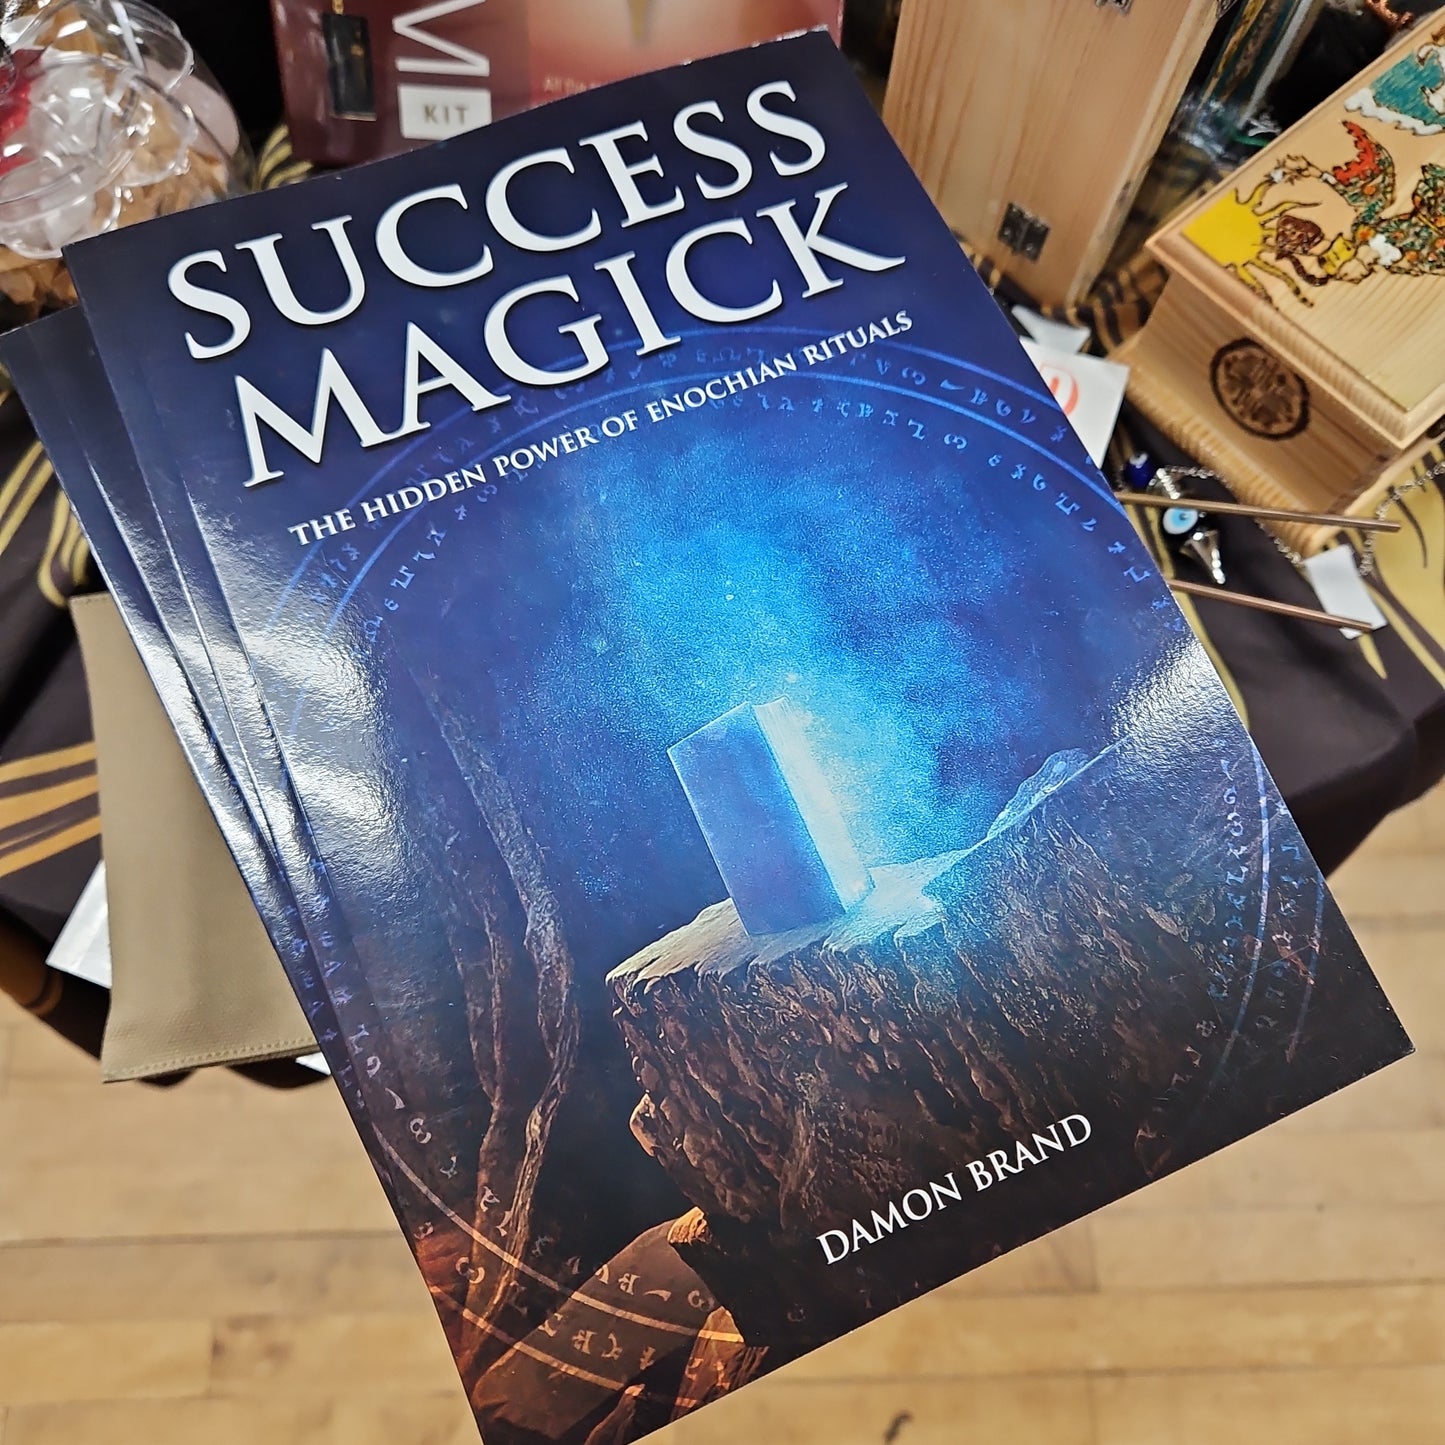 Success Magick  - The Hidden Power of Enochian Rituals